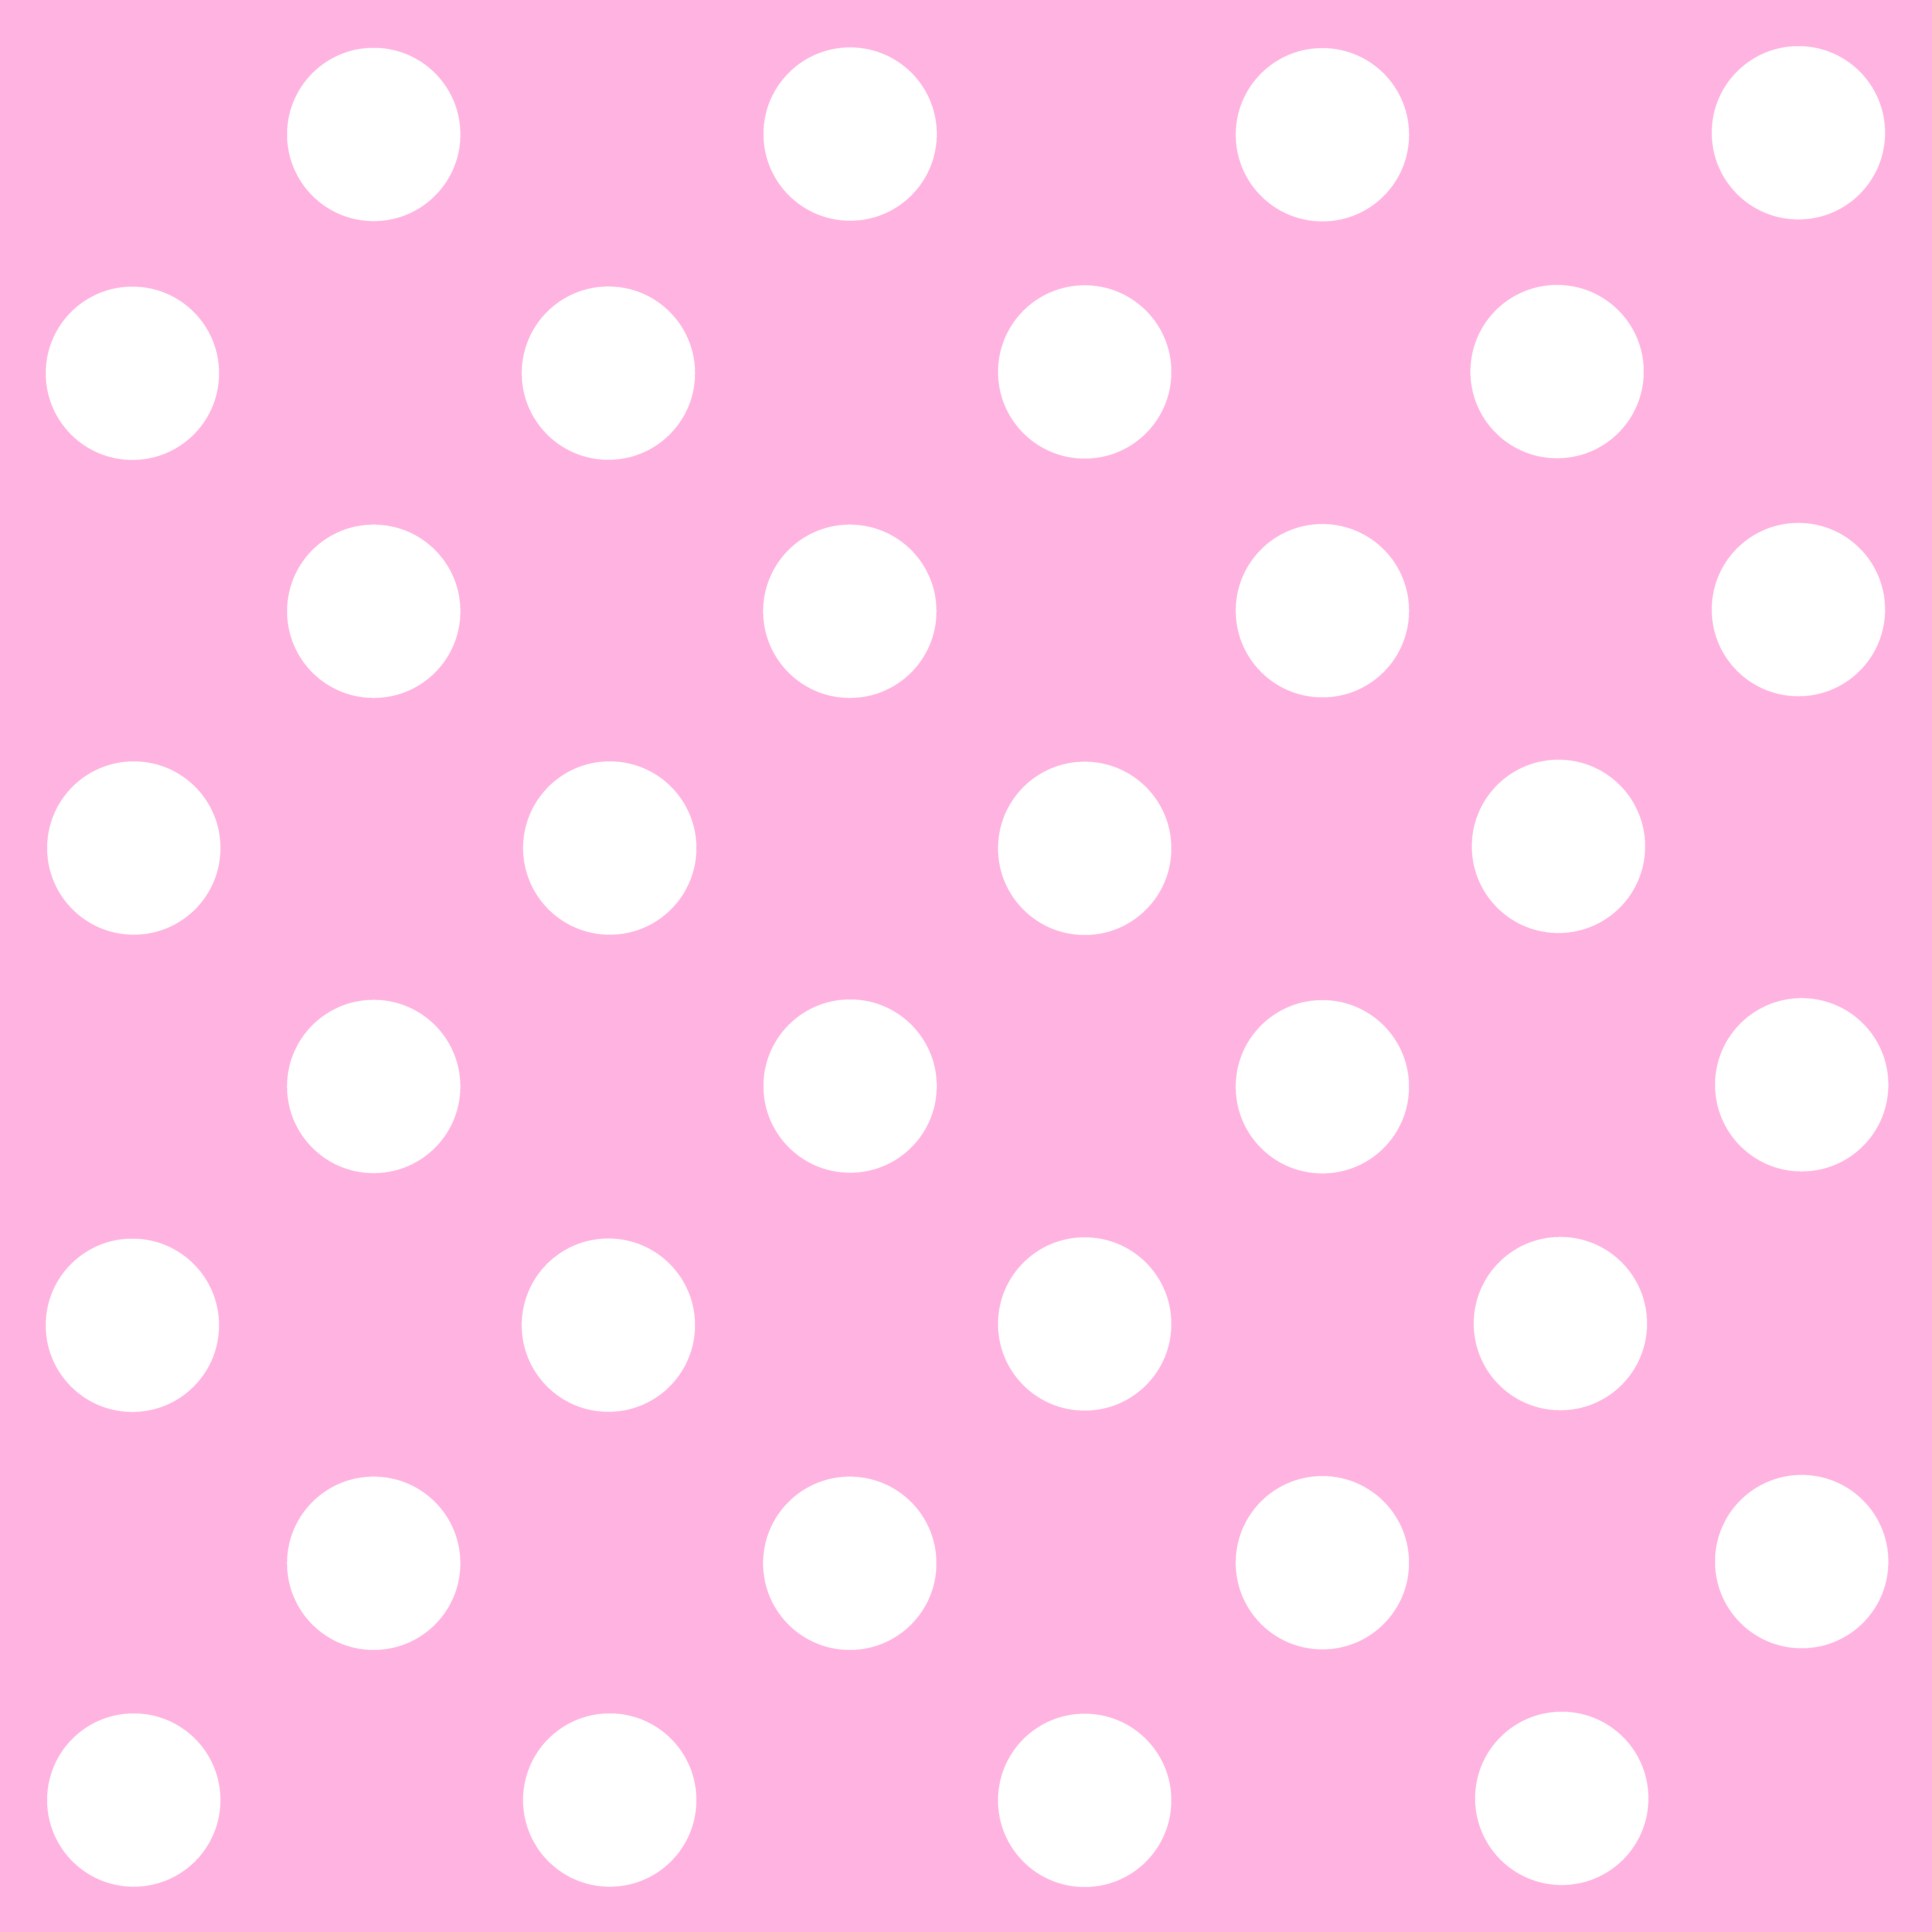 Polka dot clipart free - Clip